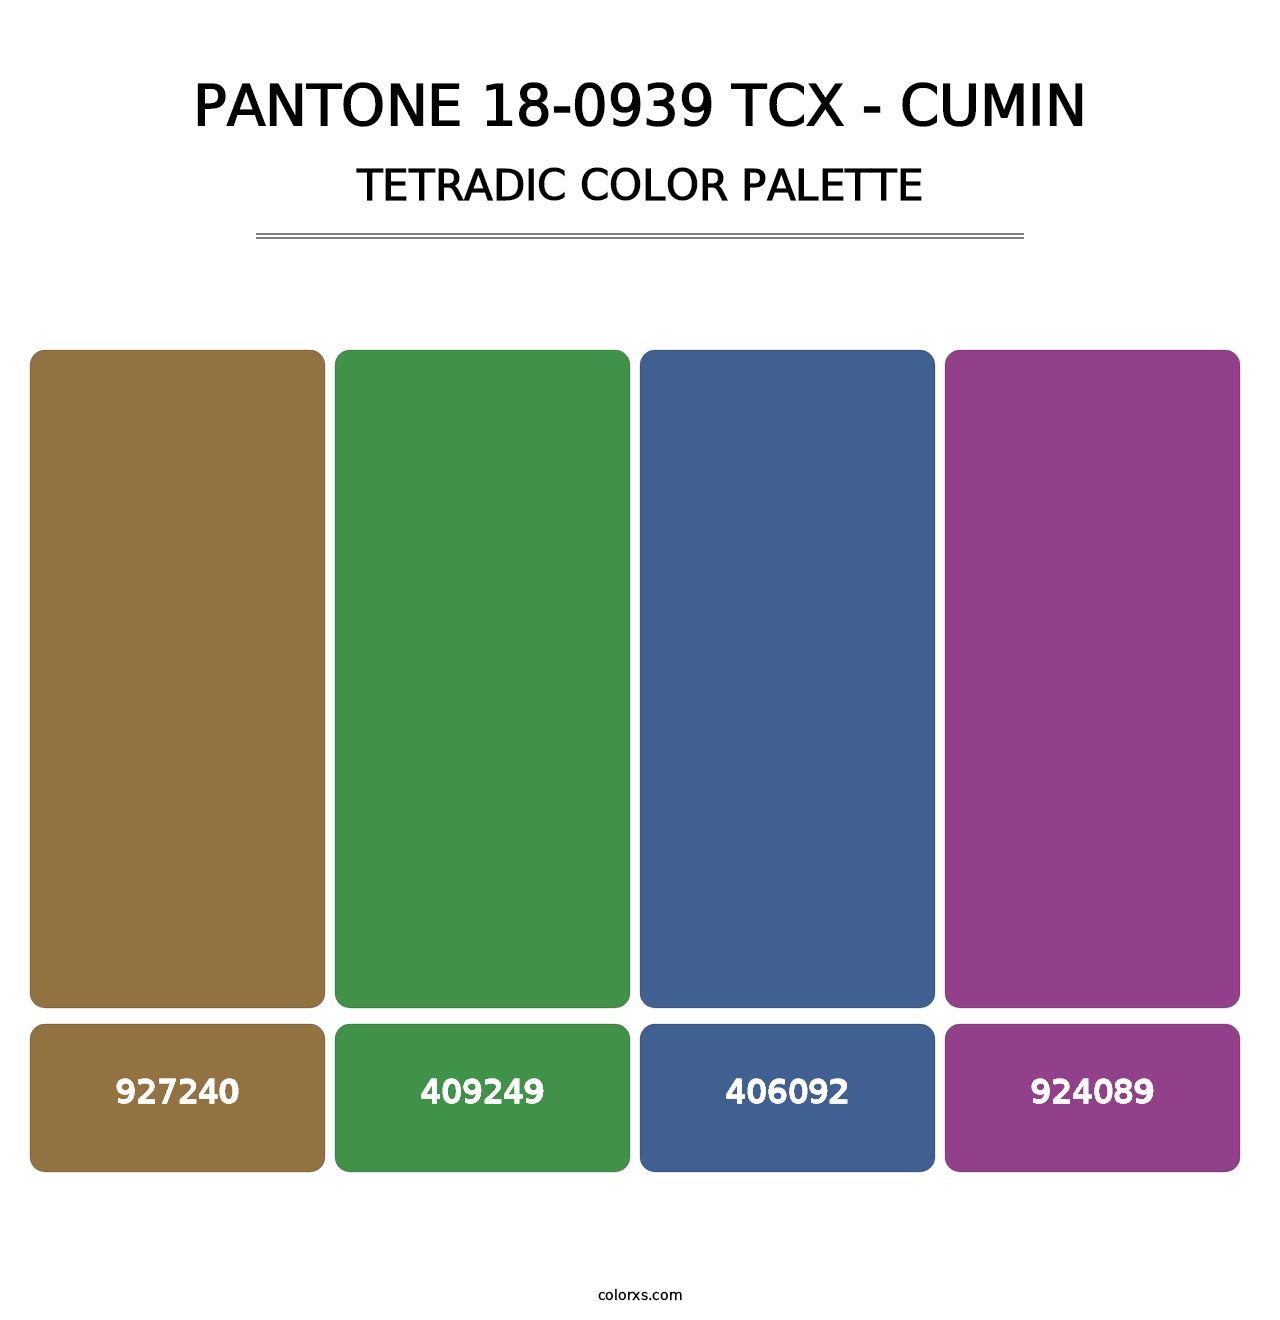 PANTONE 18-0939 TCX - Cumin - Tetradic Color Palette